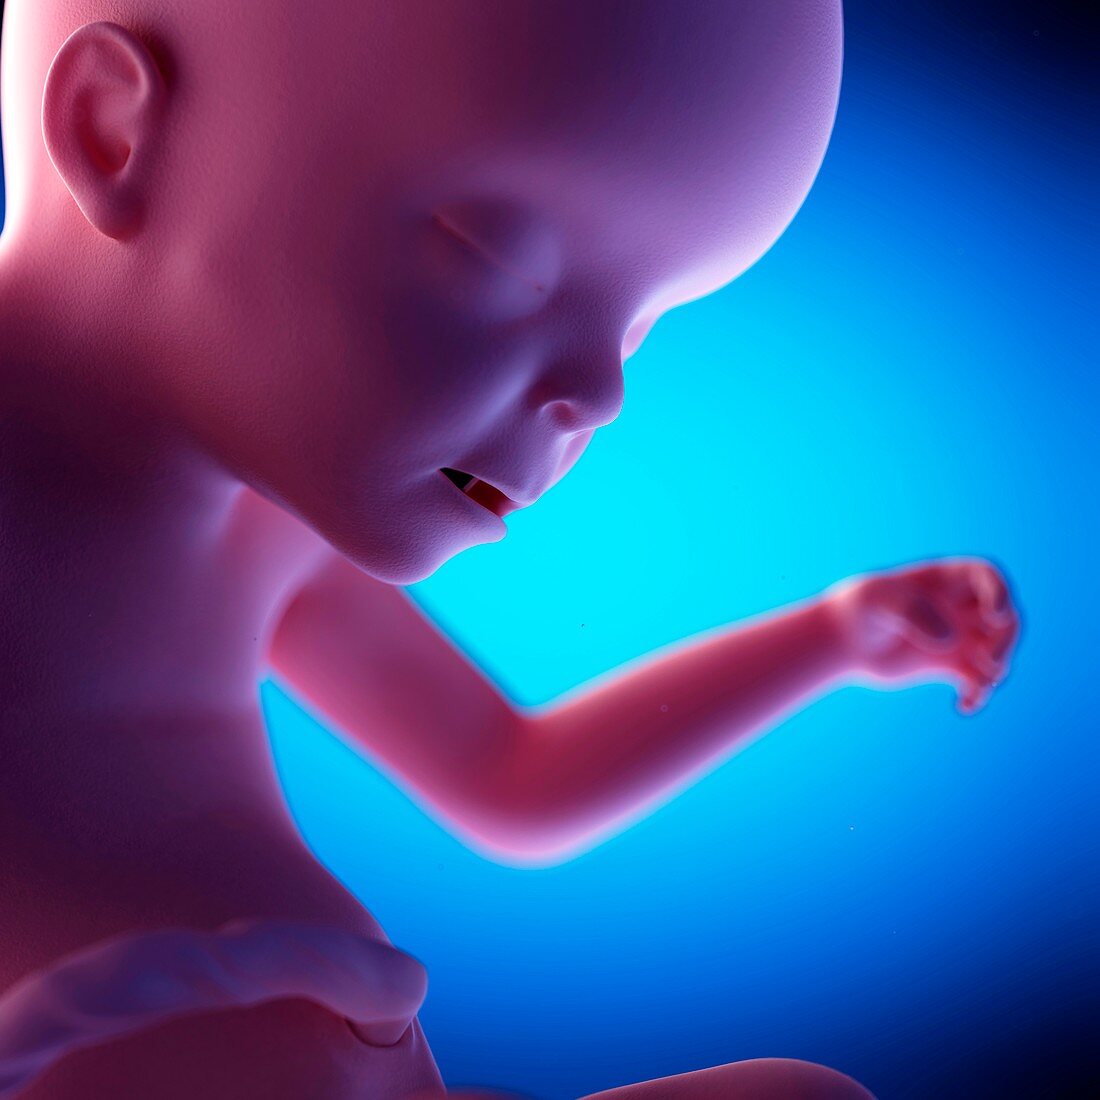 Human fetus at week 23 of gestation, illustration